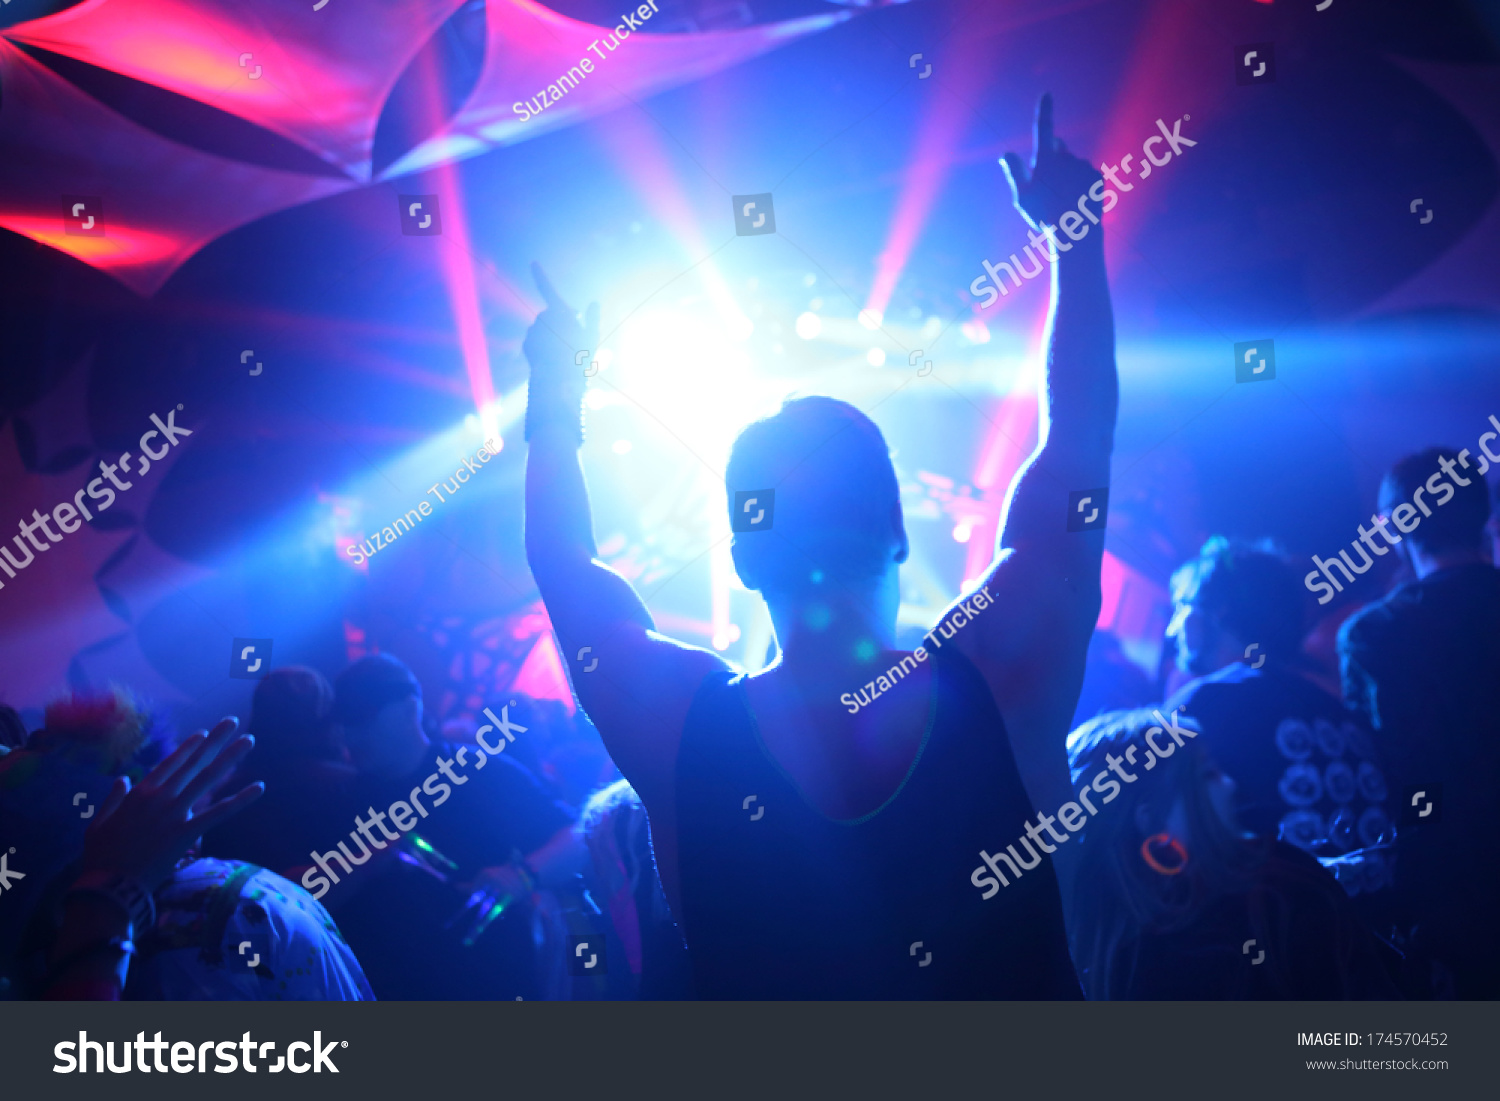 Music Concert Stock Photo 174570452 : Shutterstock